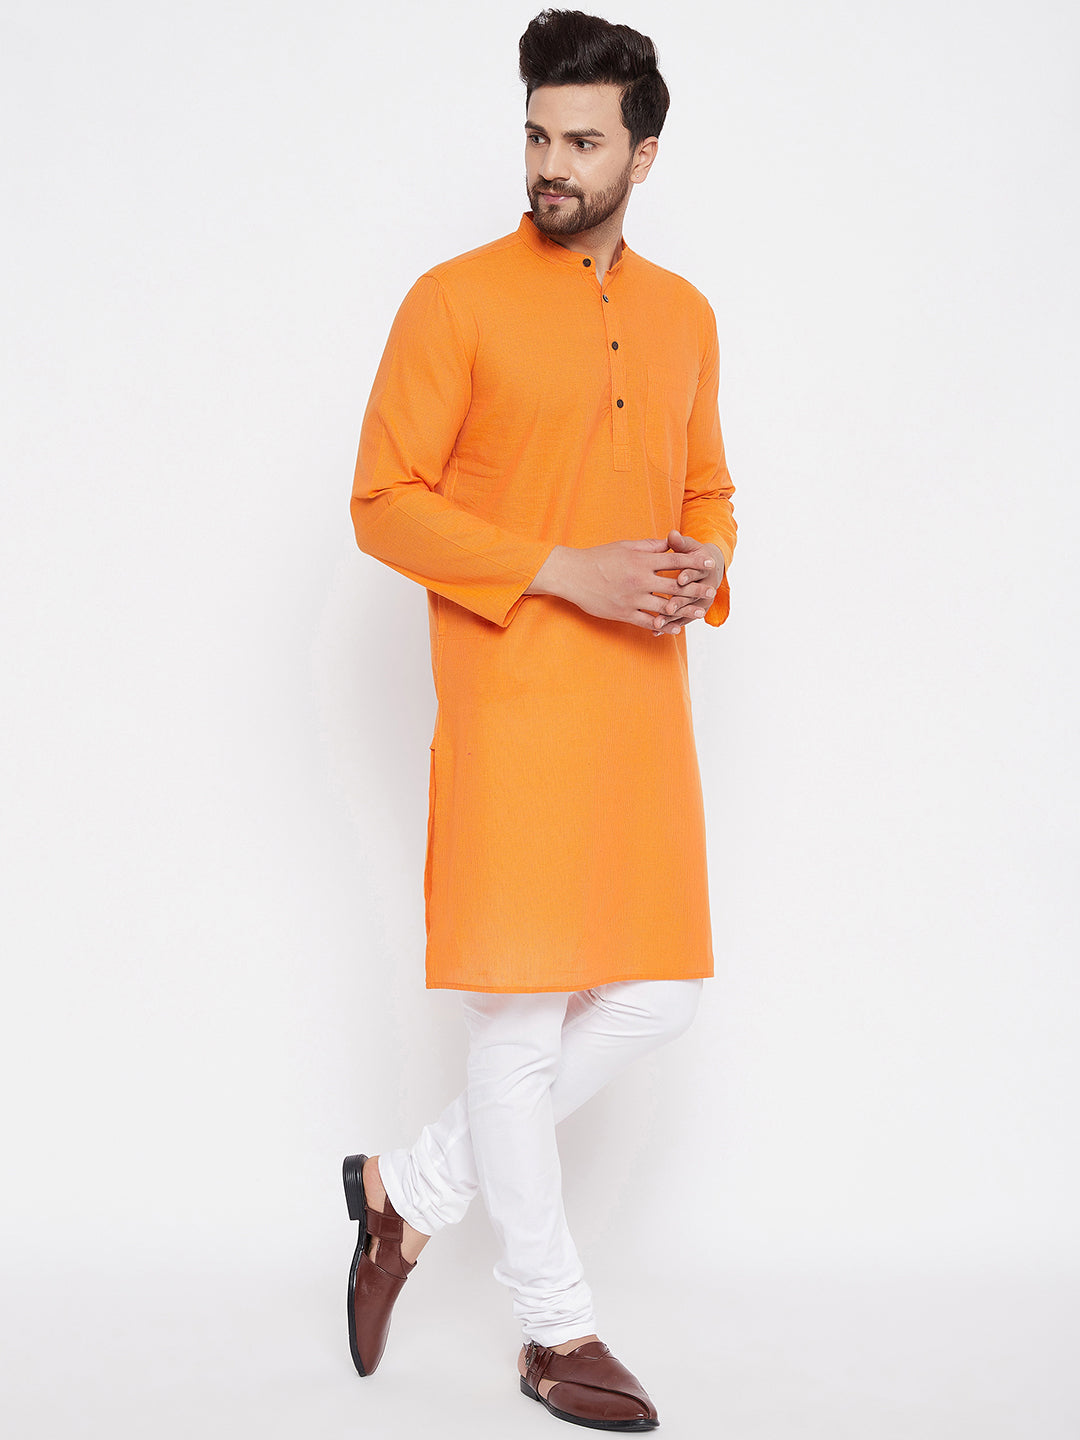 Men's Pure Cotton Striped Orange Kurta2 - Even Apparels